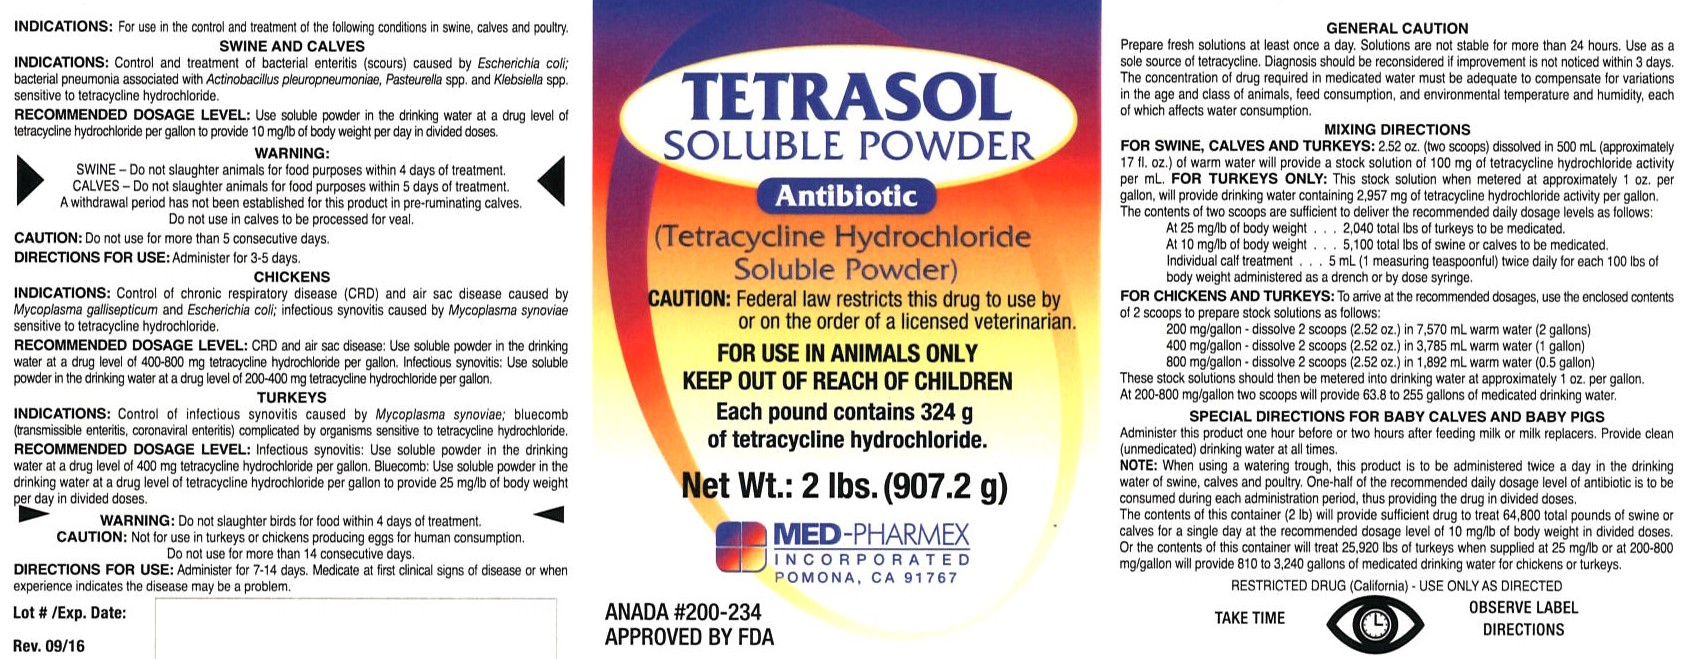 Tetrasol Soluble Powder 2lbs. label